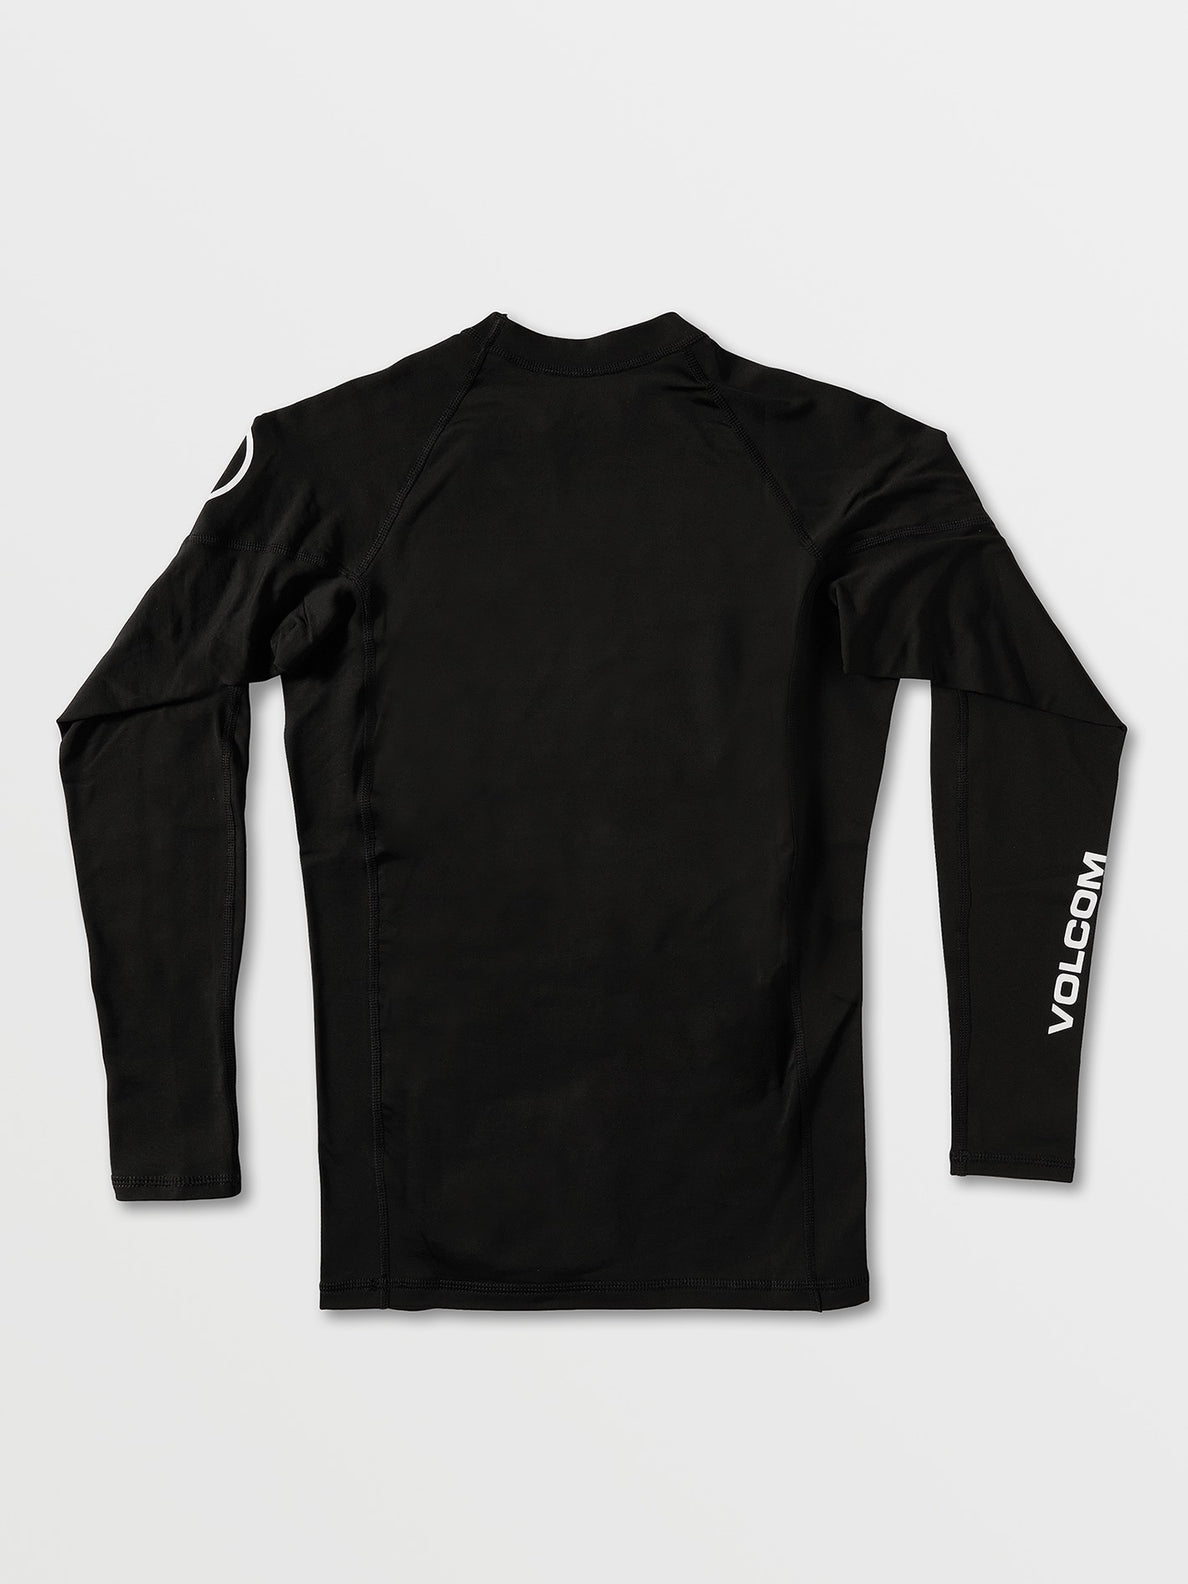 Hotainer Long Sleeve Shirt - Black